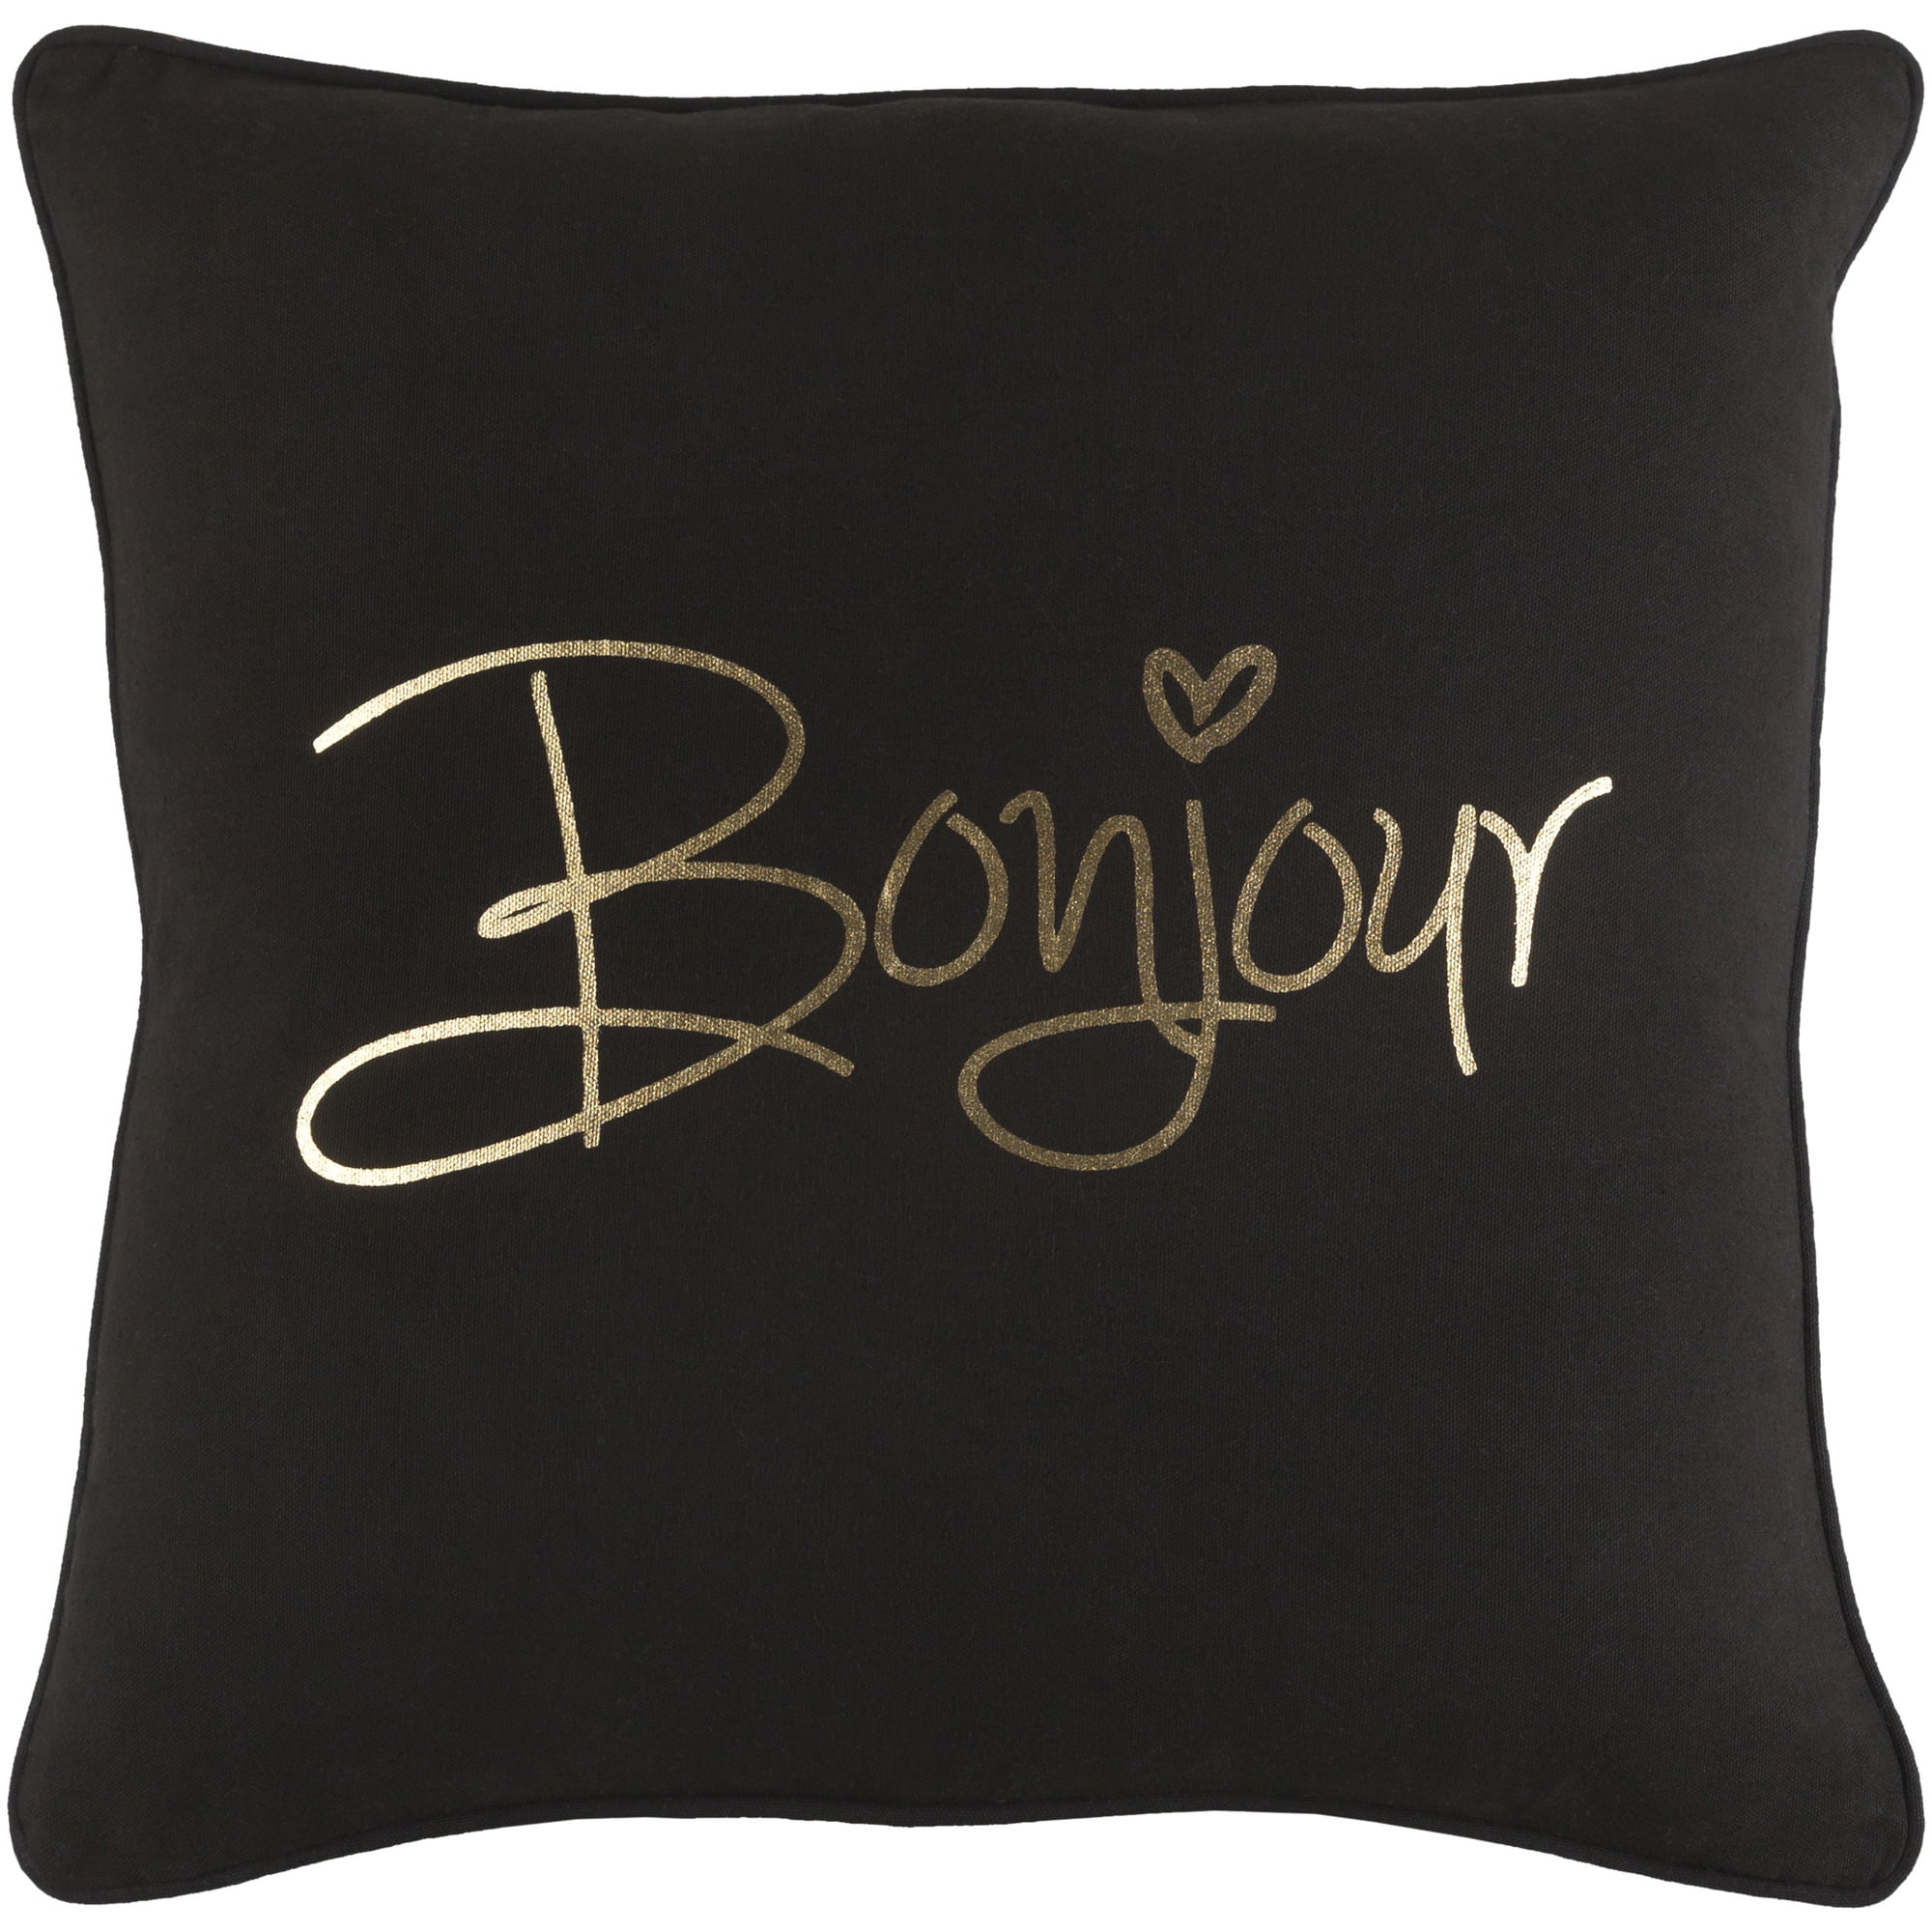 Home Bonjour Throw Pillow Multicolor 18x18 P.S